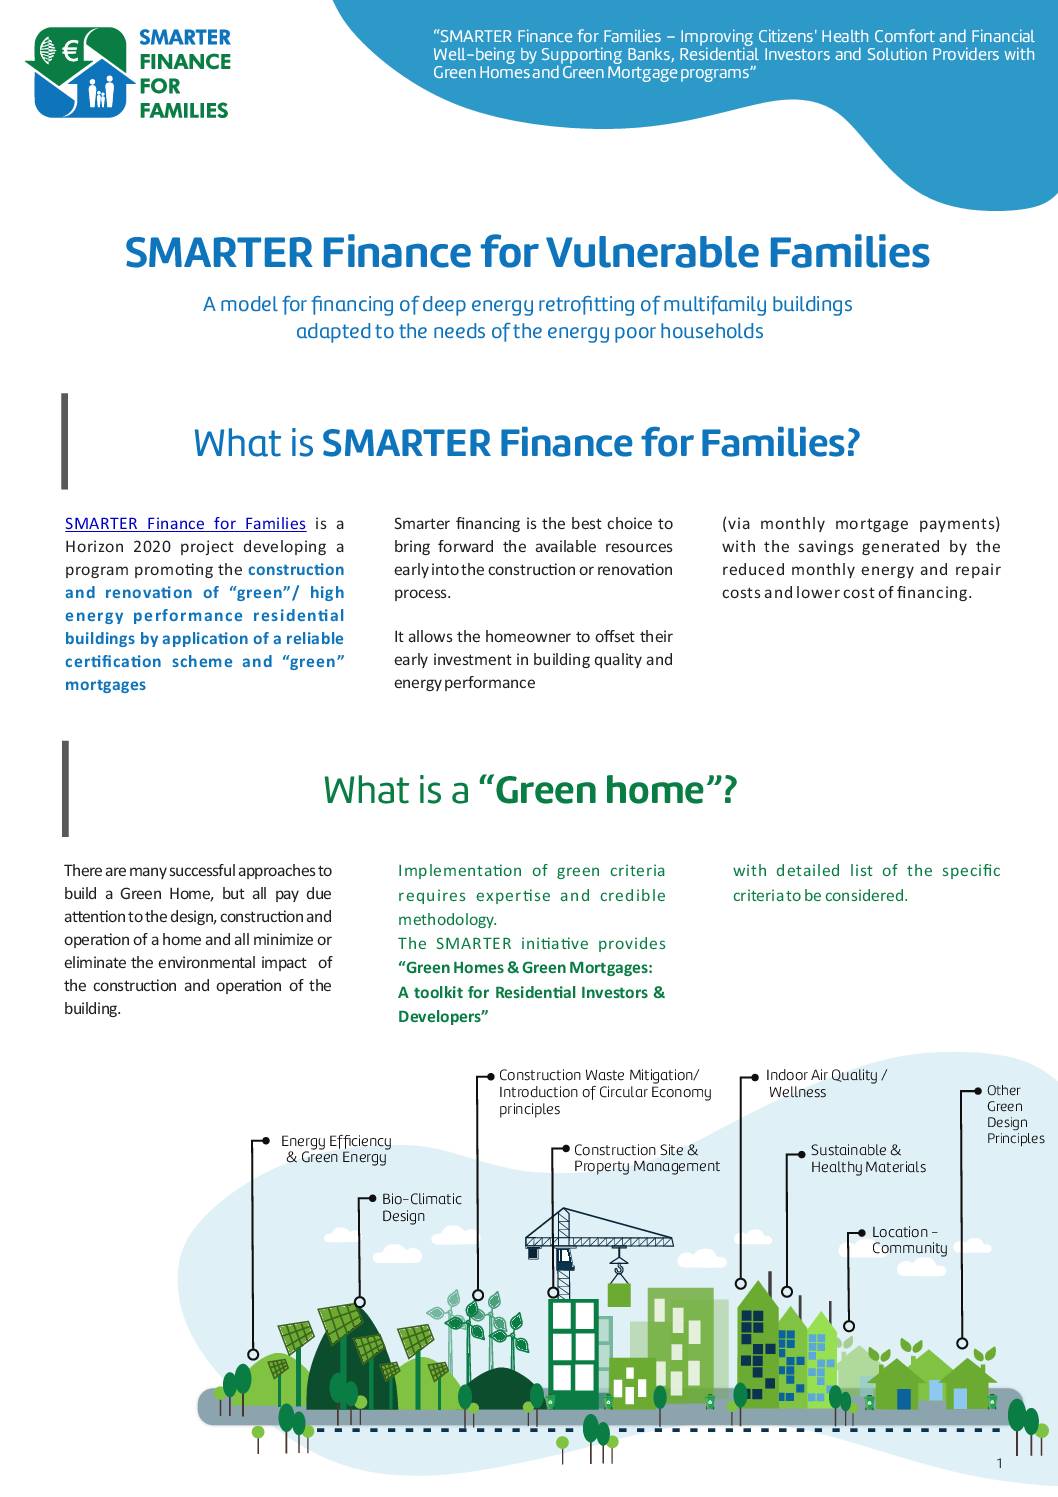 SMARTER Finance for Vulnerable Families